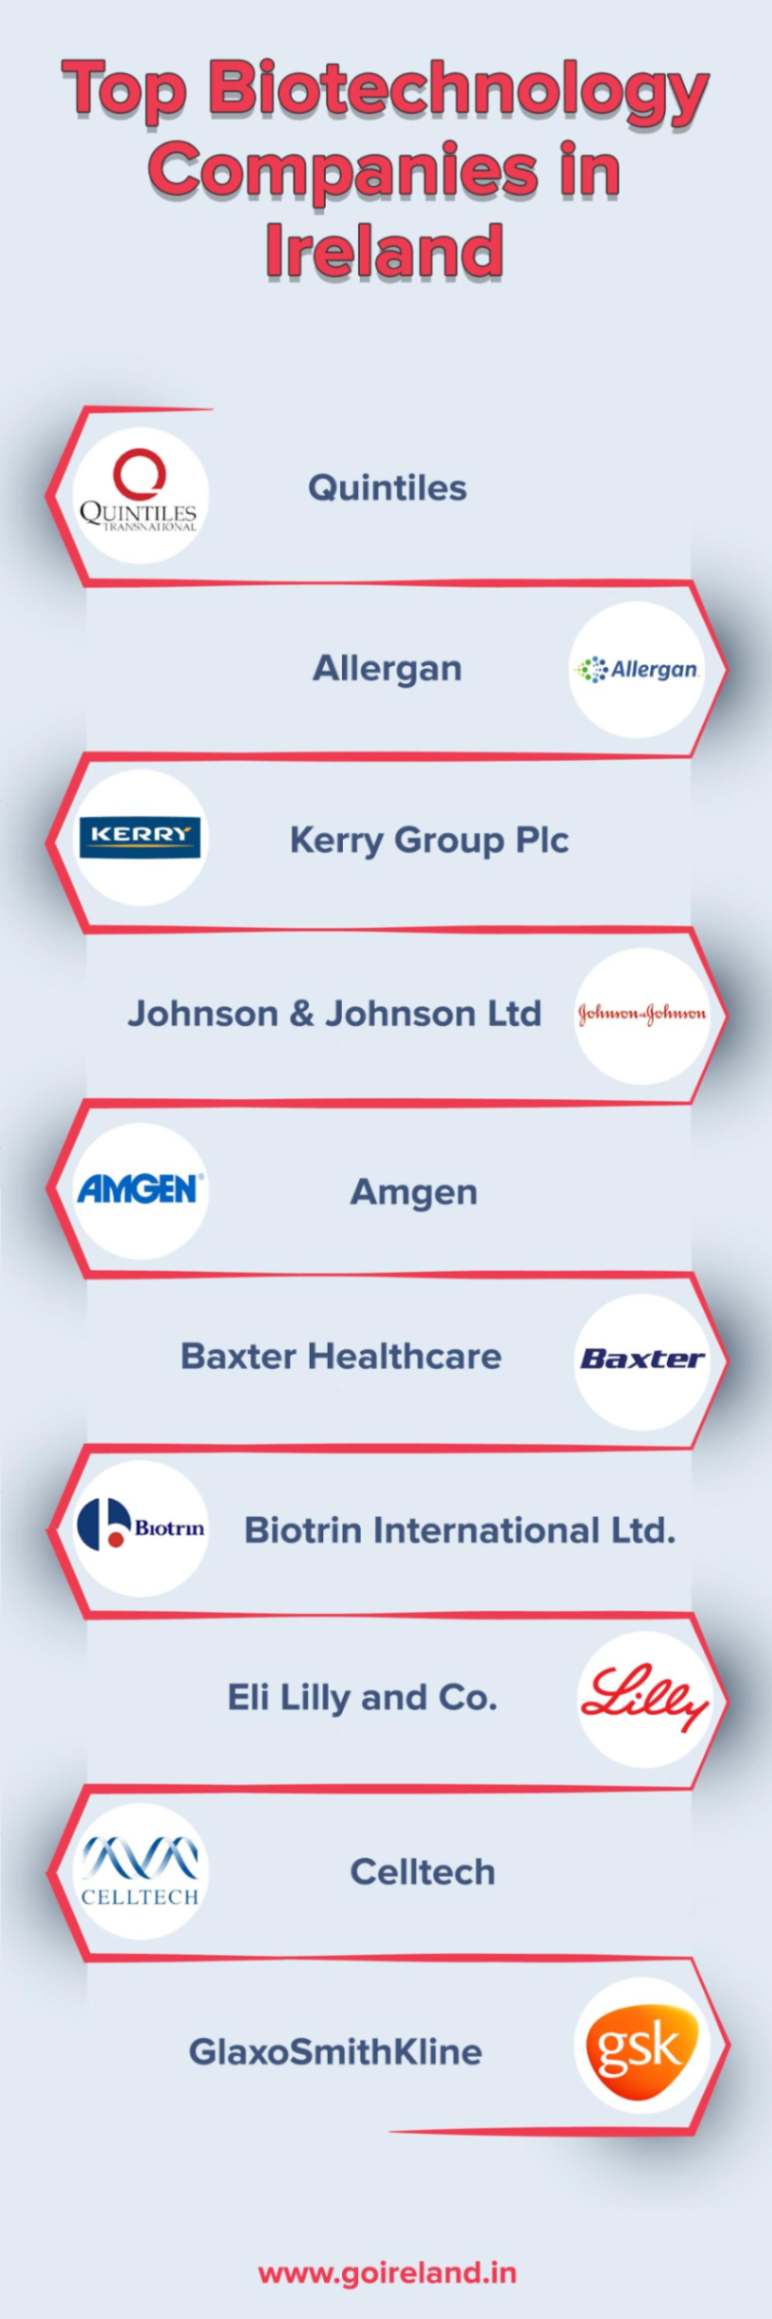 Top Biotechnology Companies in Ireland